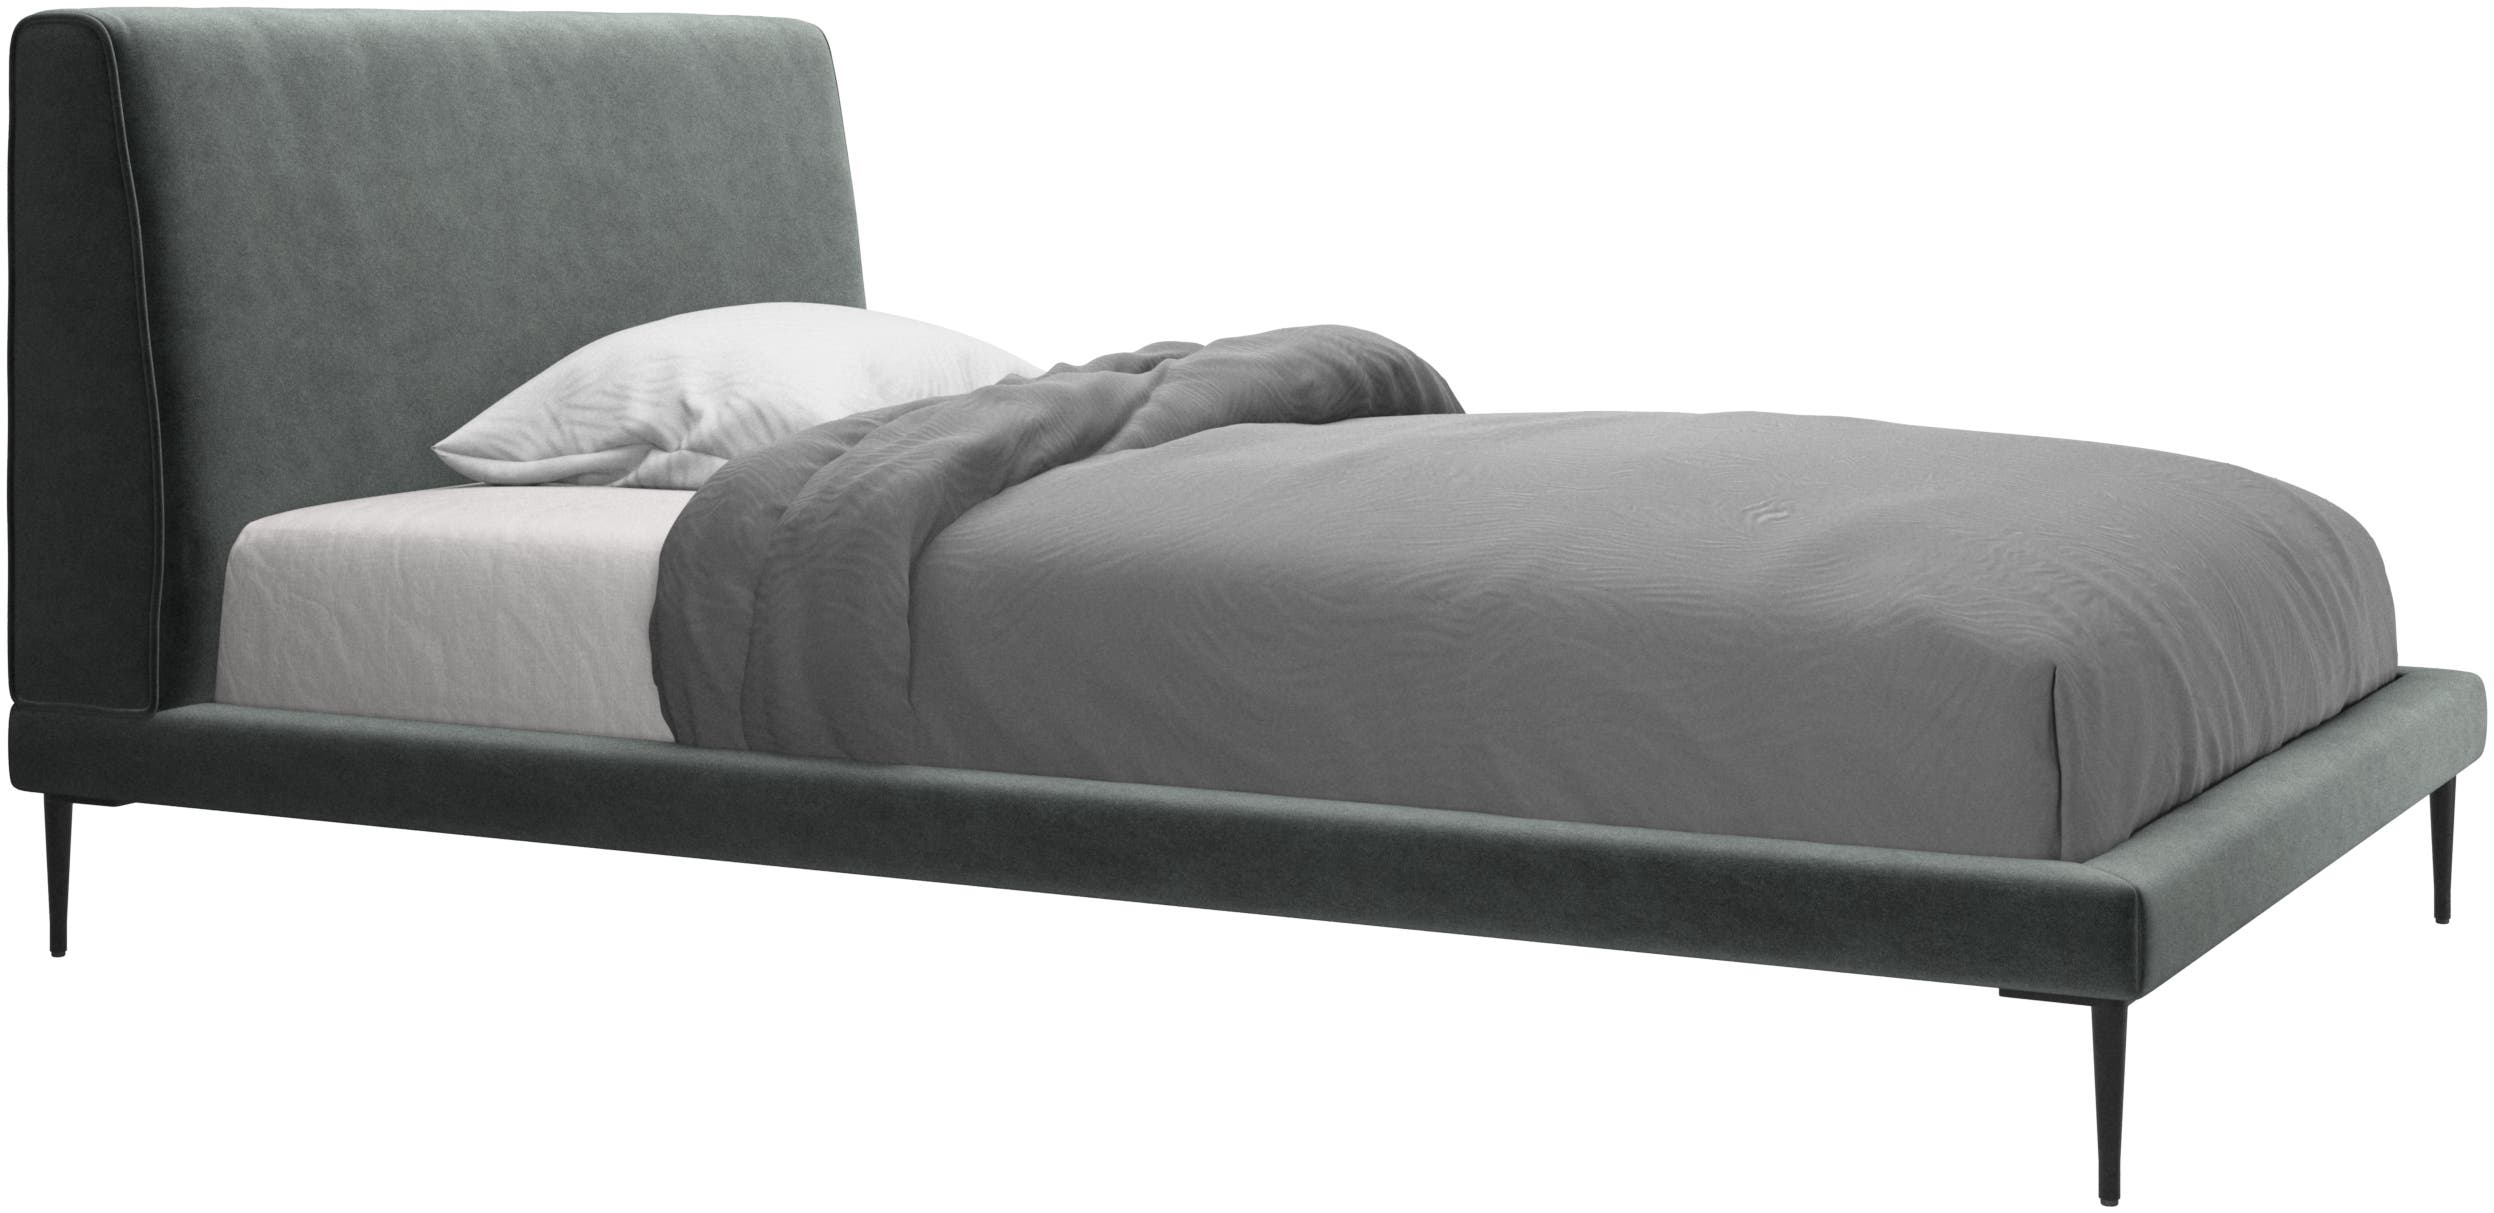 Arlington bed, excl. mattress